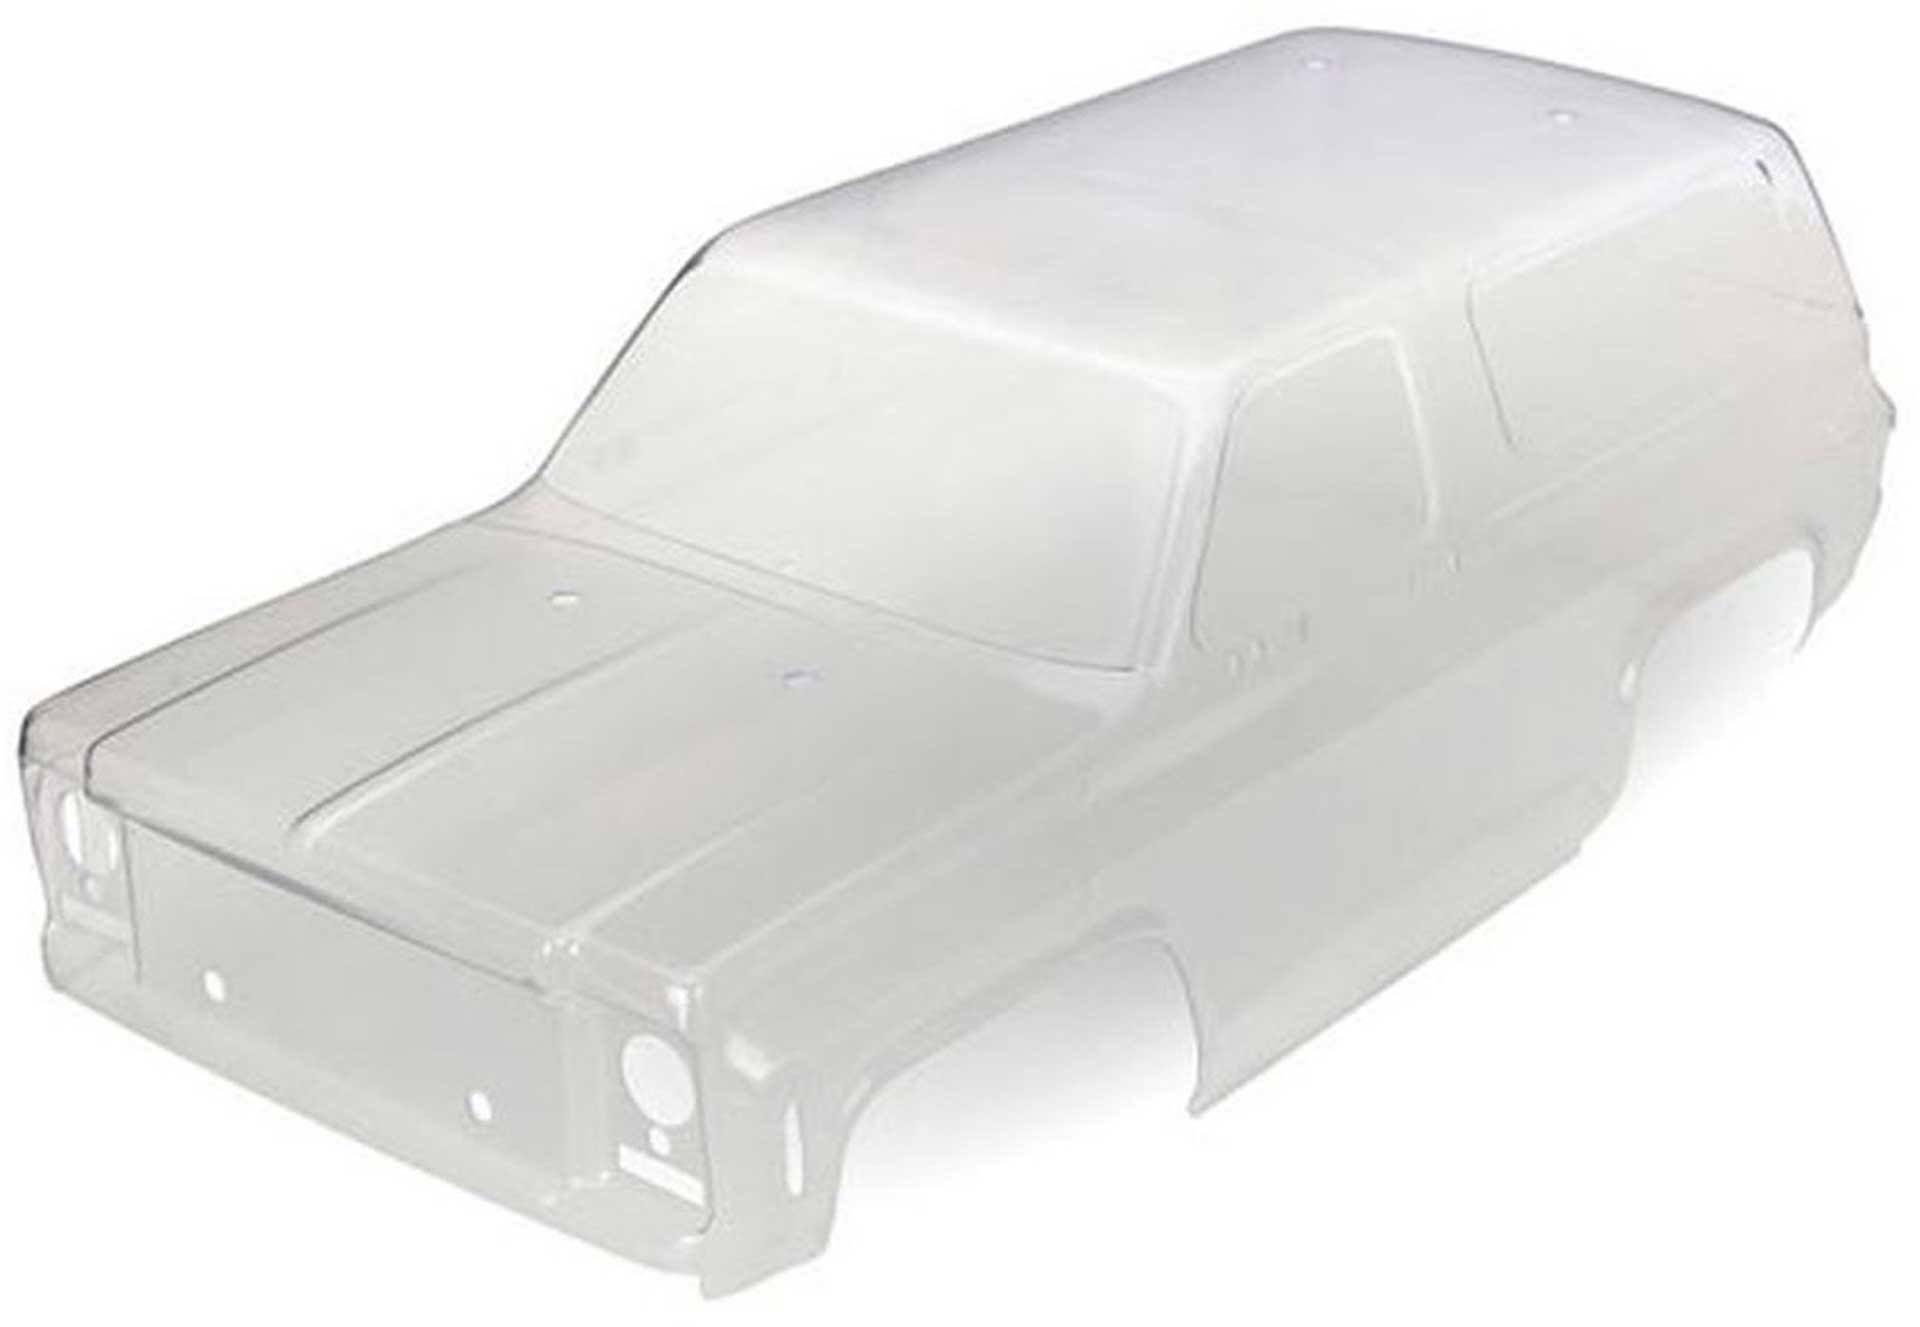 Traxxas 8130 TRX-4 1979 Chevrolet Blazer Clear Body | Hobbytech Toys